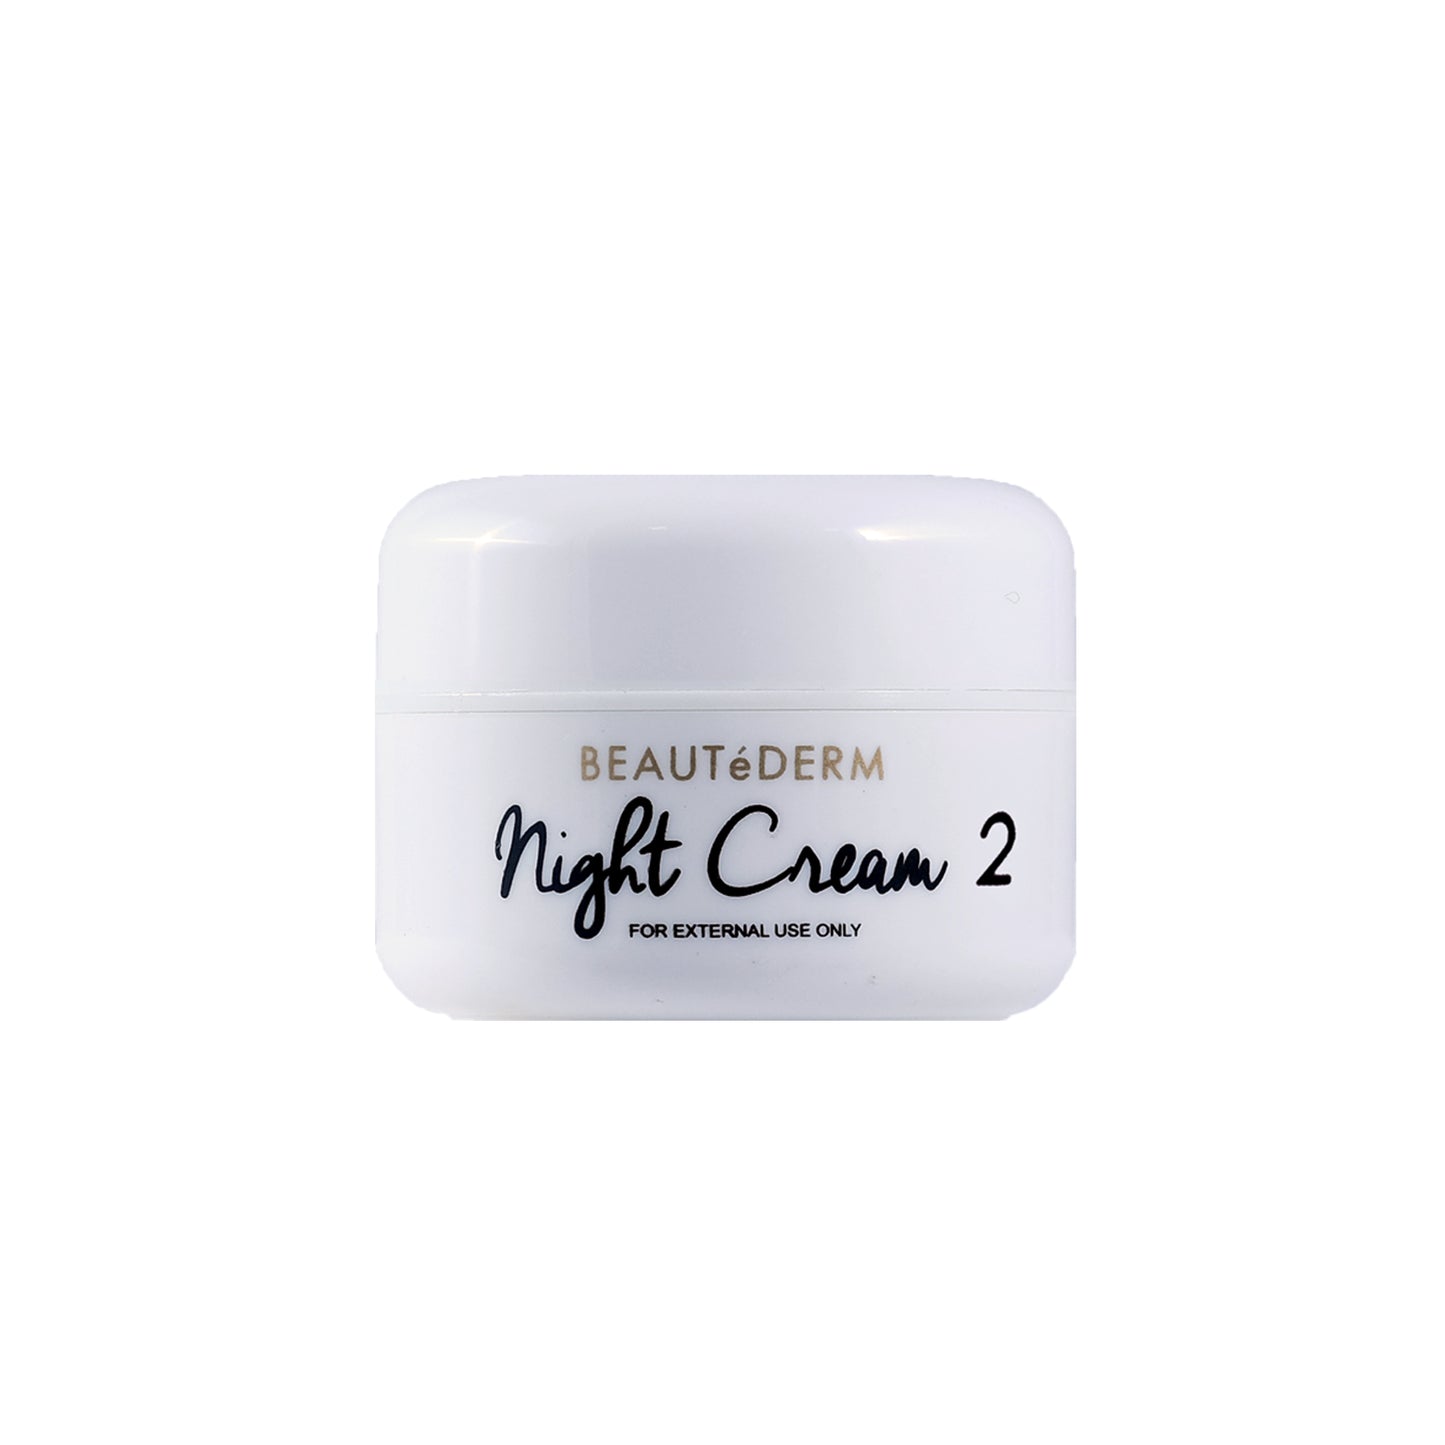 Beautederm Night Cream 2 20g Moisturizing